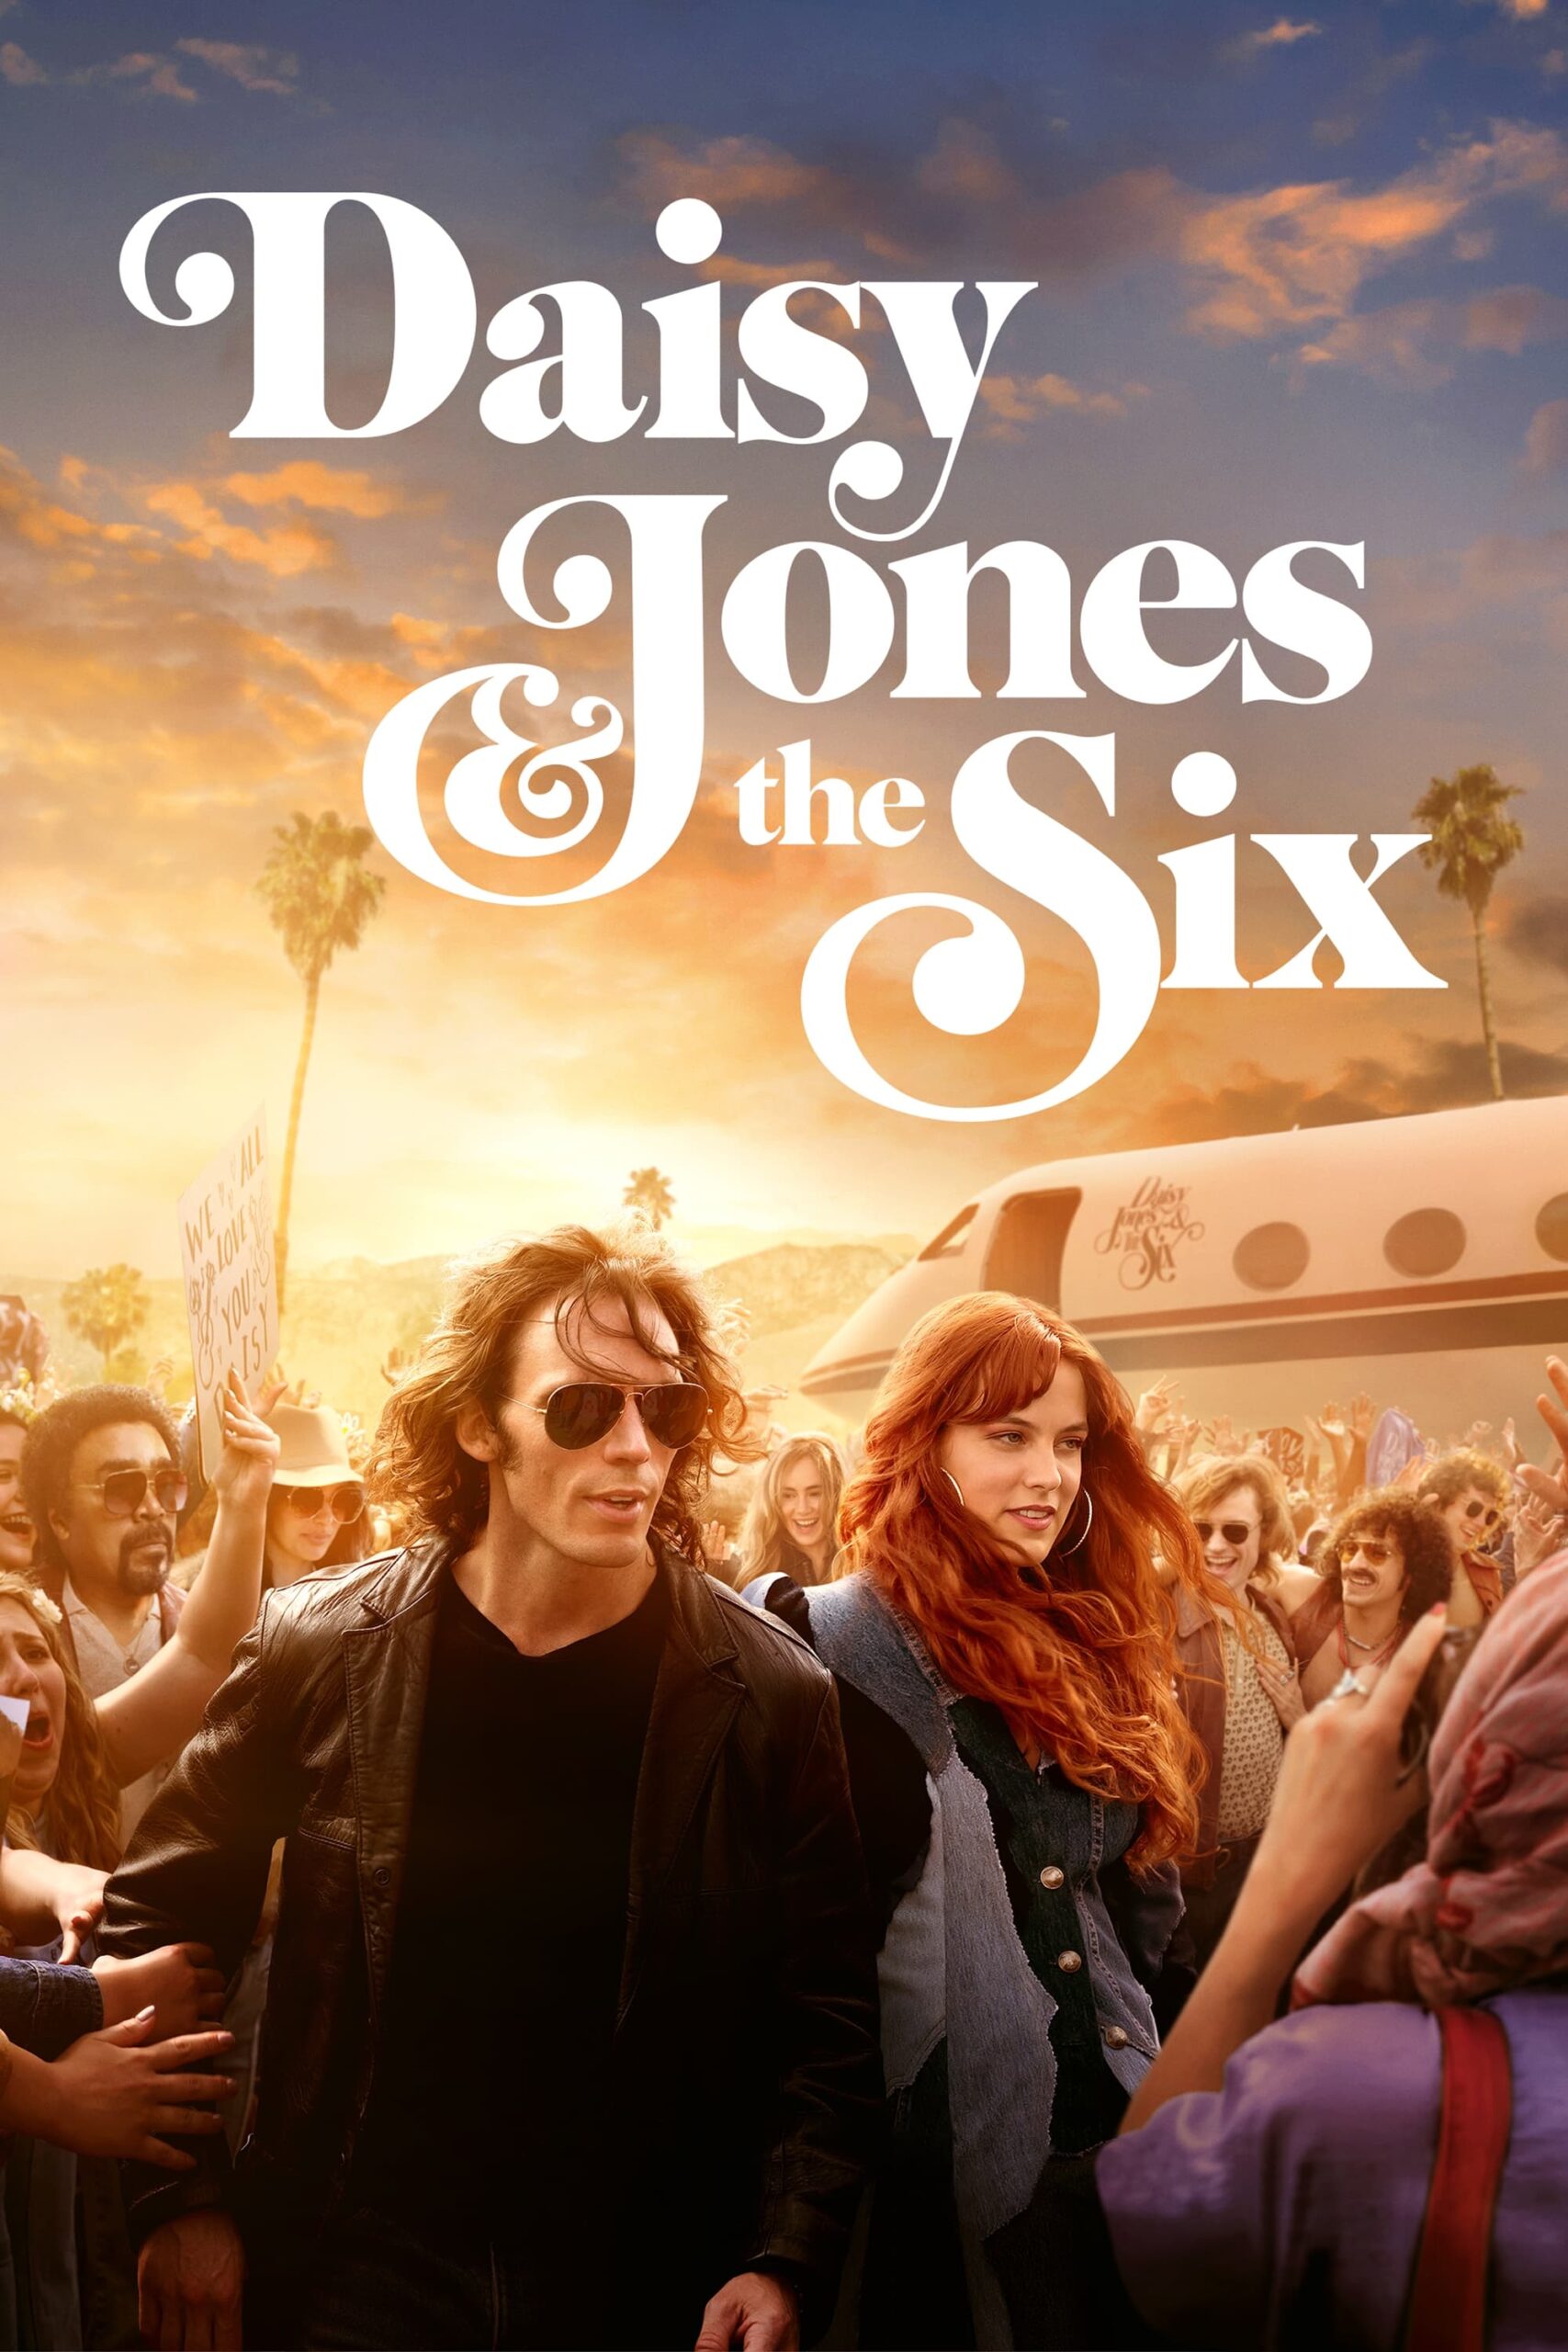 Plakát pro film “Daisy Jones & the Six”